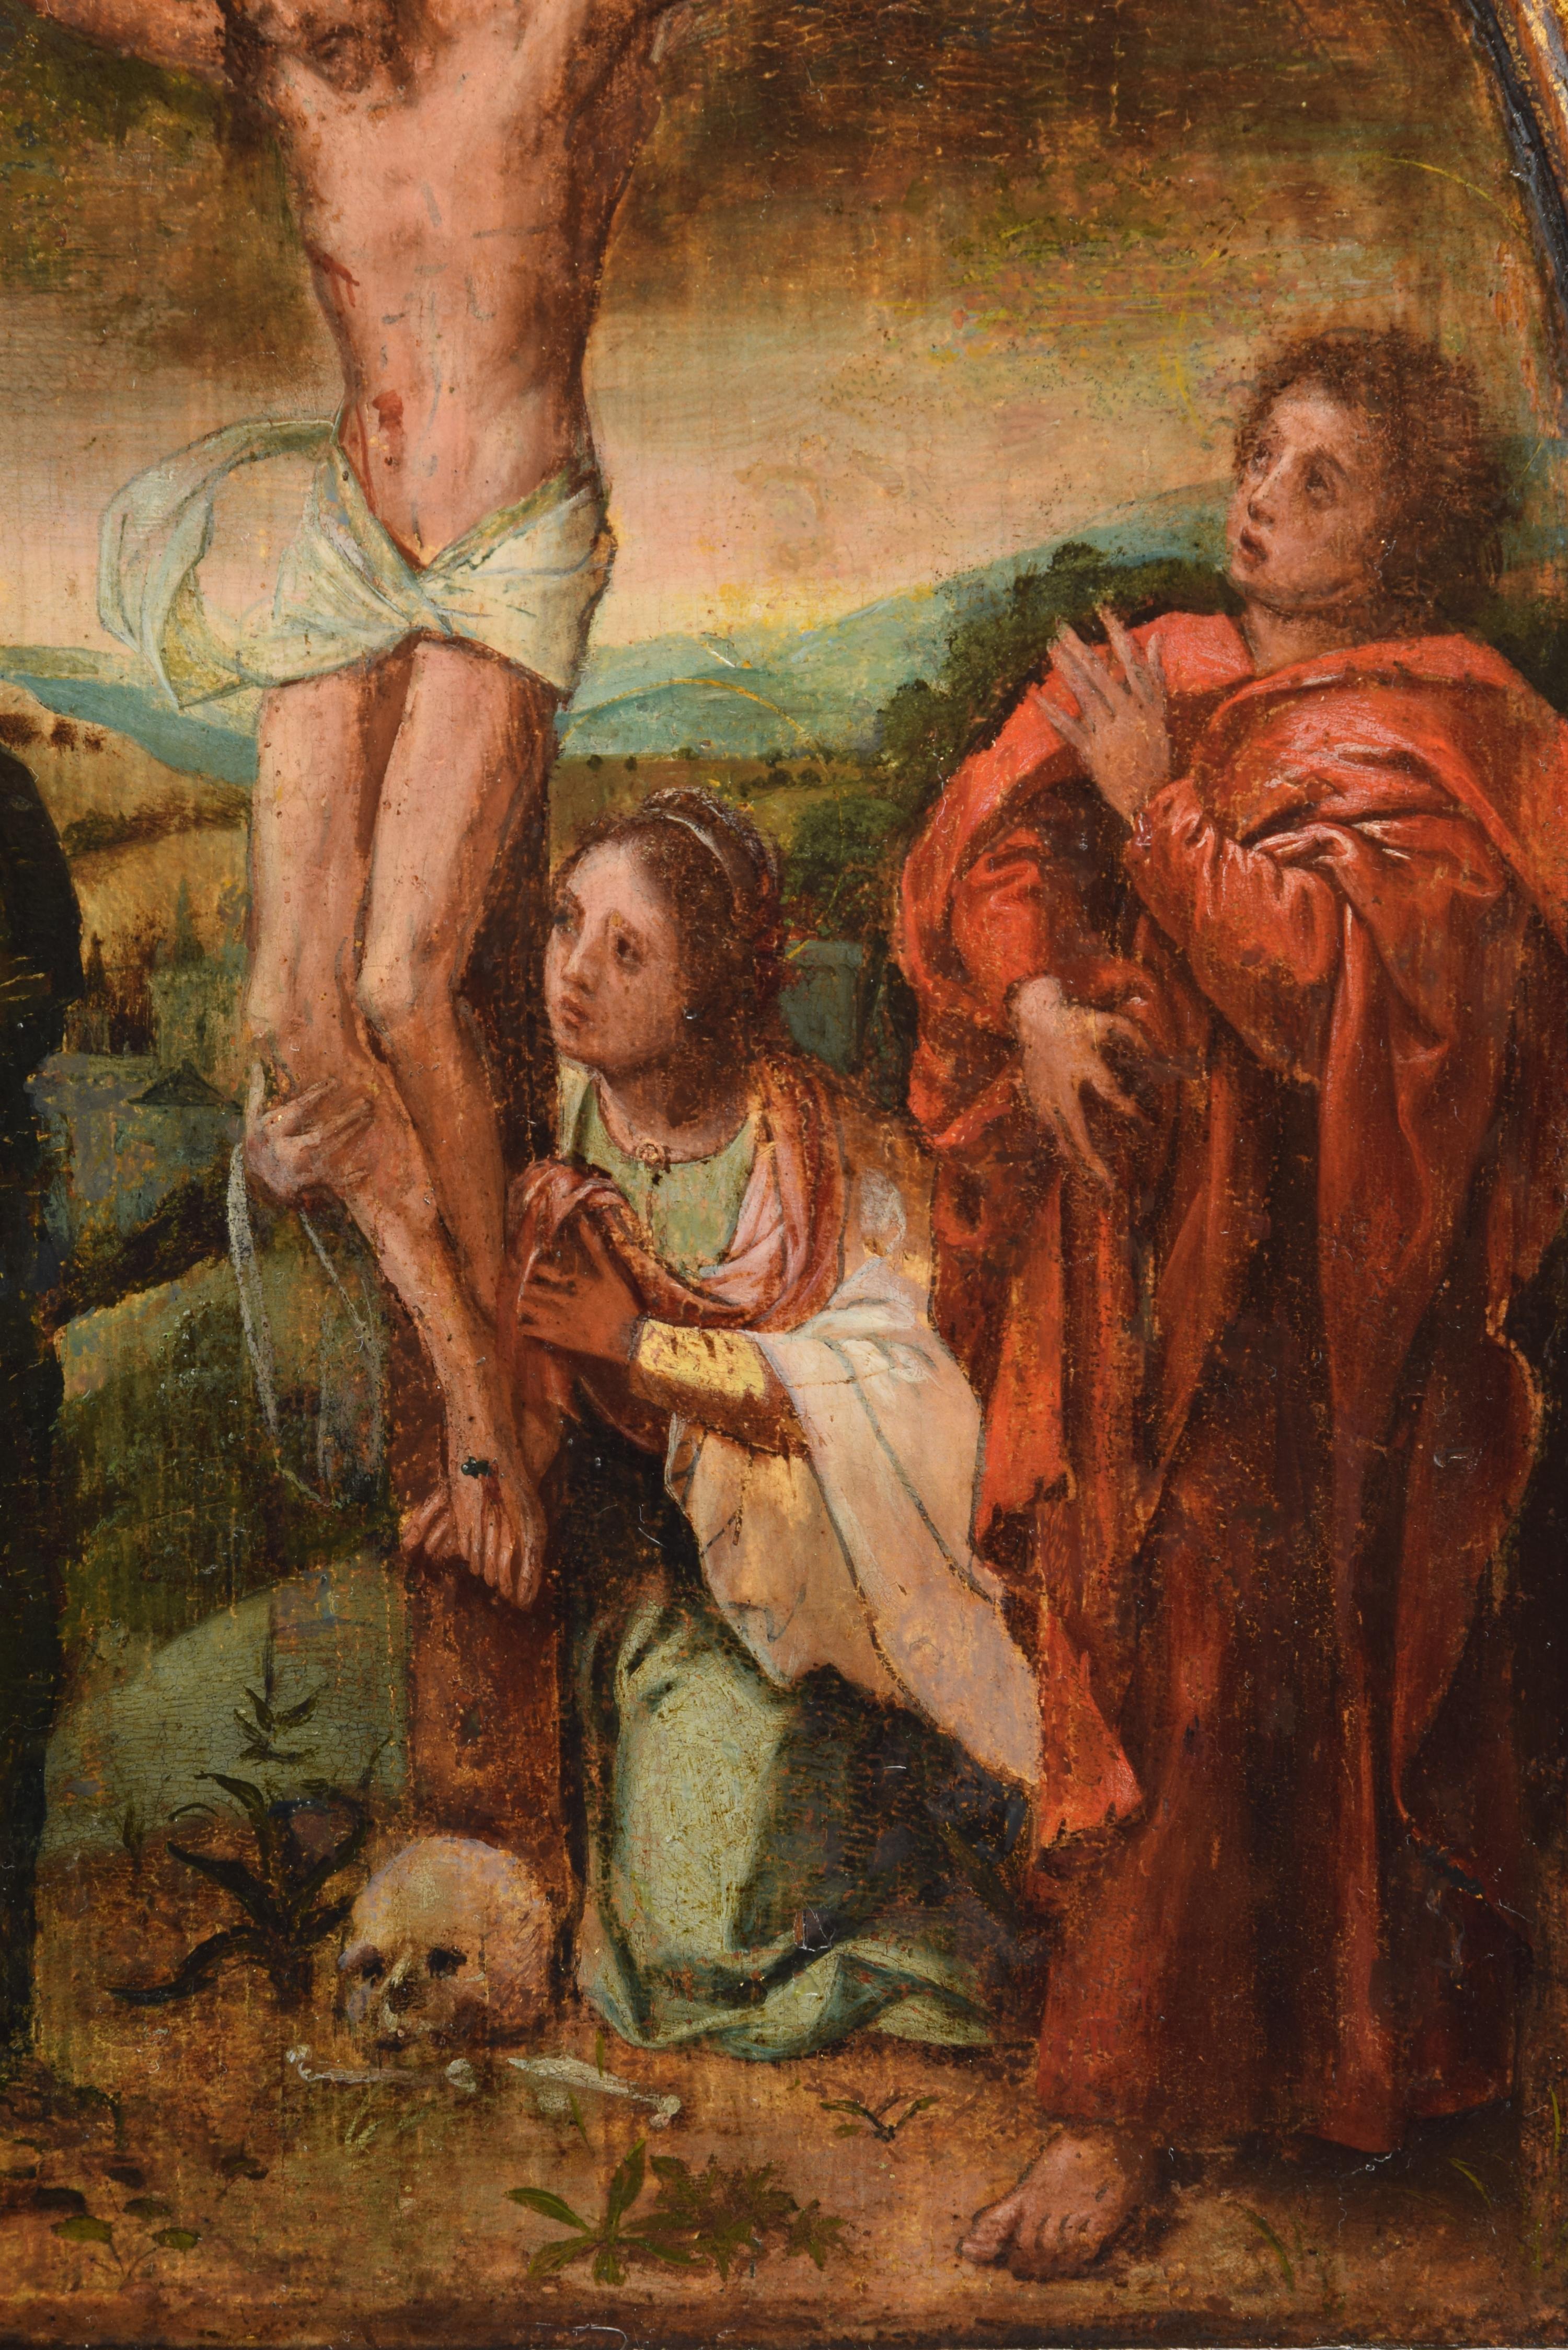 Renaissance Crucifixion, Oil on Panel, Spanish-Flemish School, 16th Century